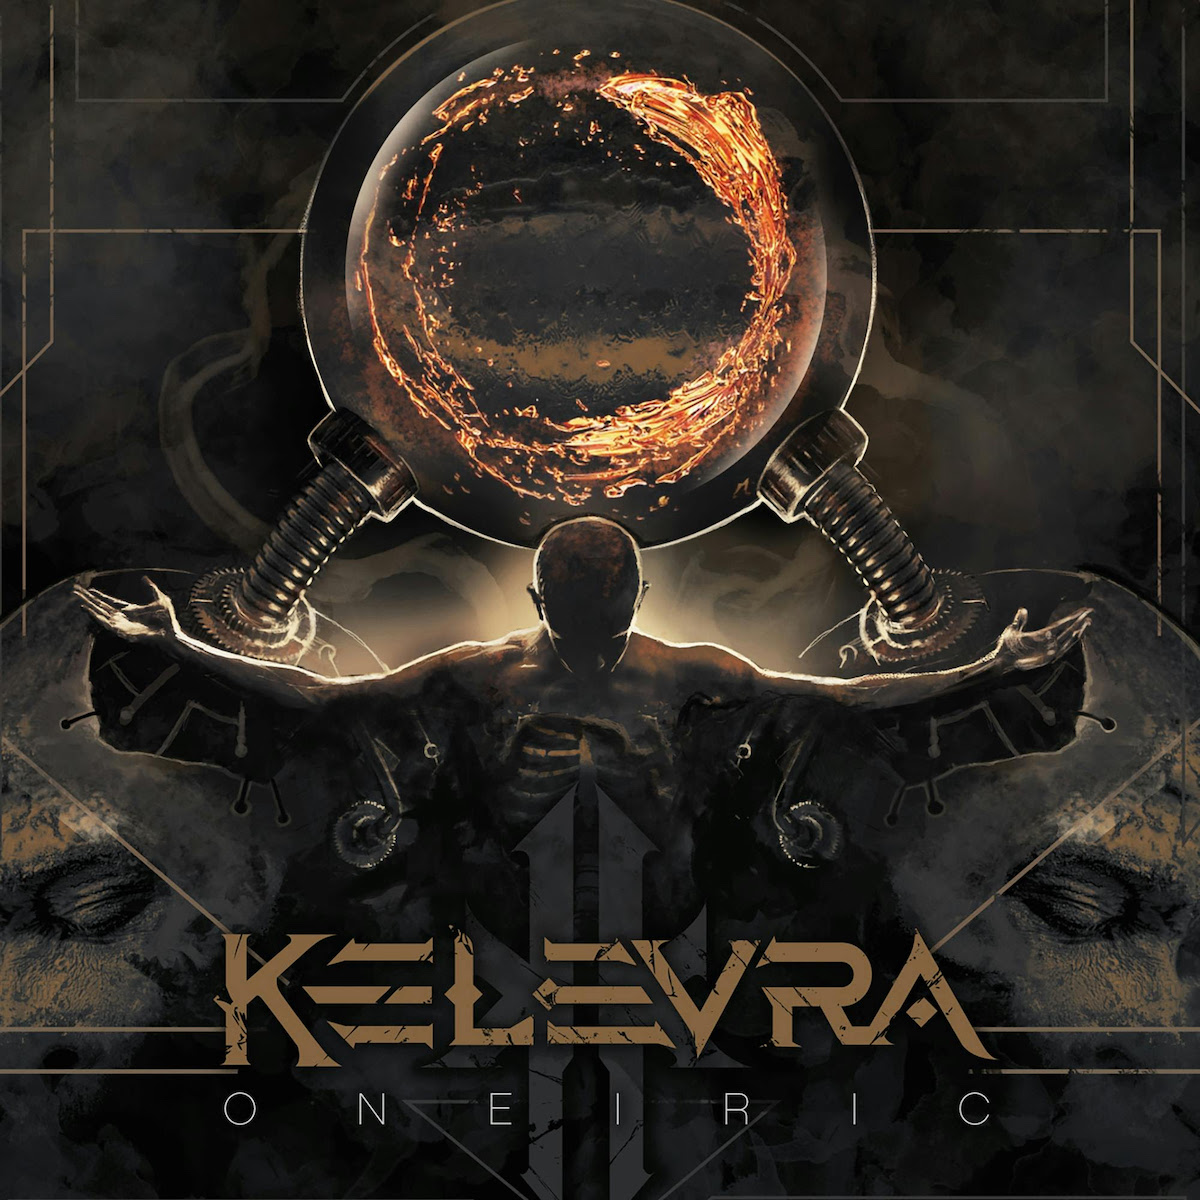 ALBUM REVIEW: Oneiric by Kelevra